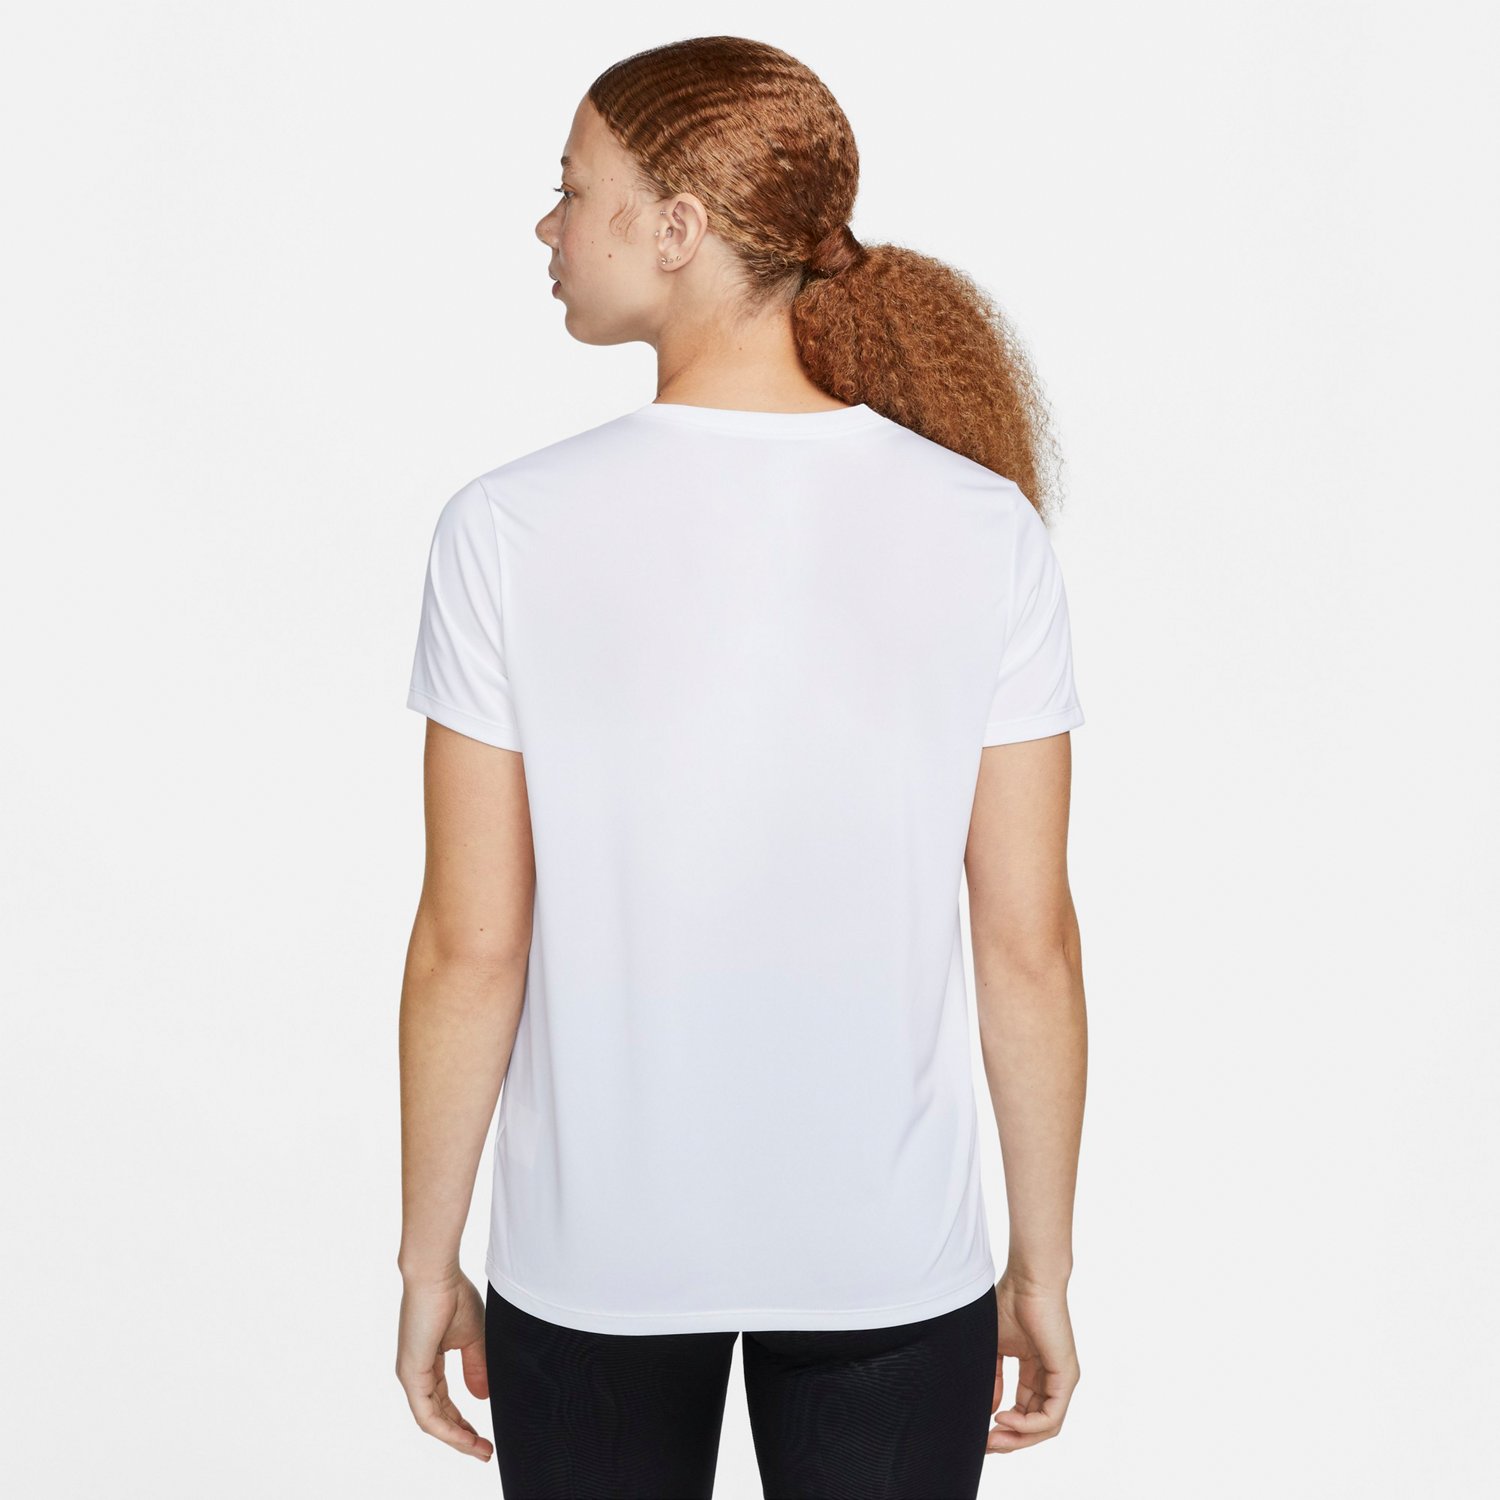 Nike Women's Legend RLGD LBR T Shirt, Relaxed Fit, Dri-FIT